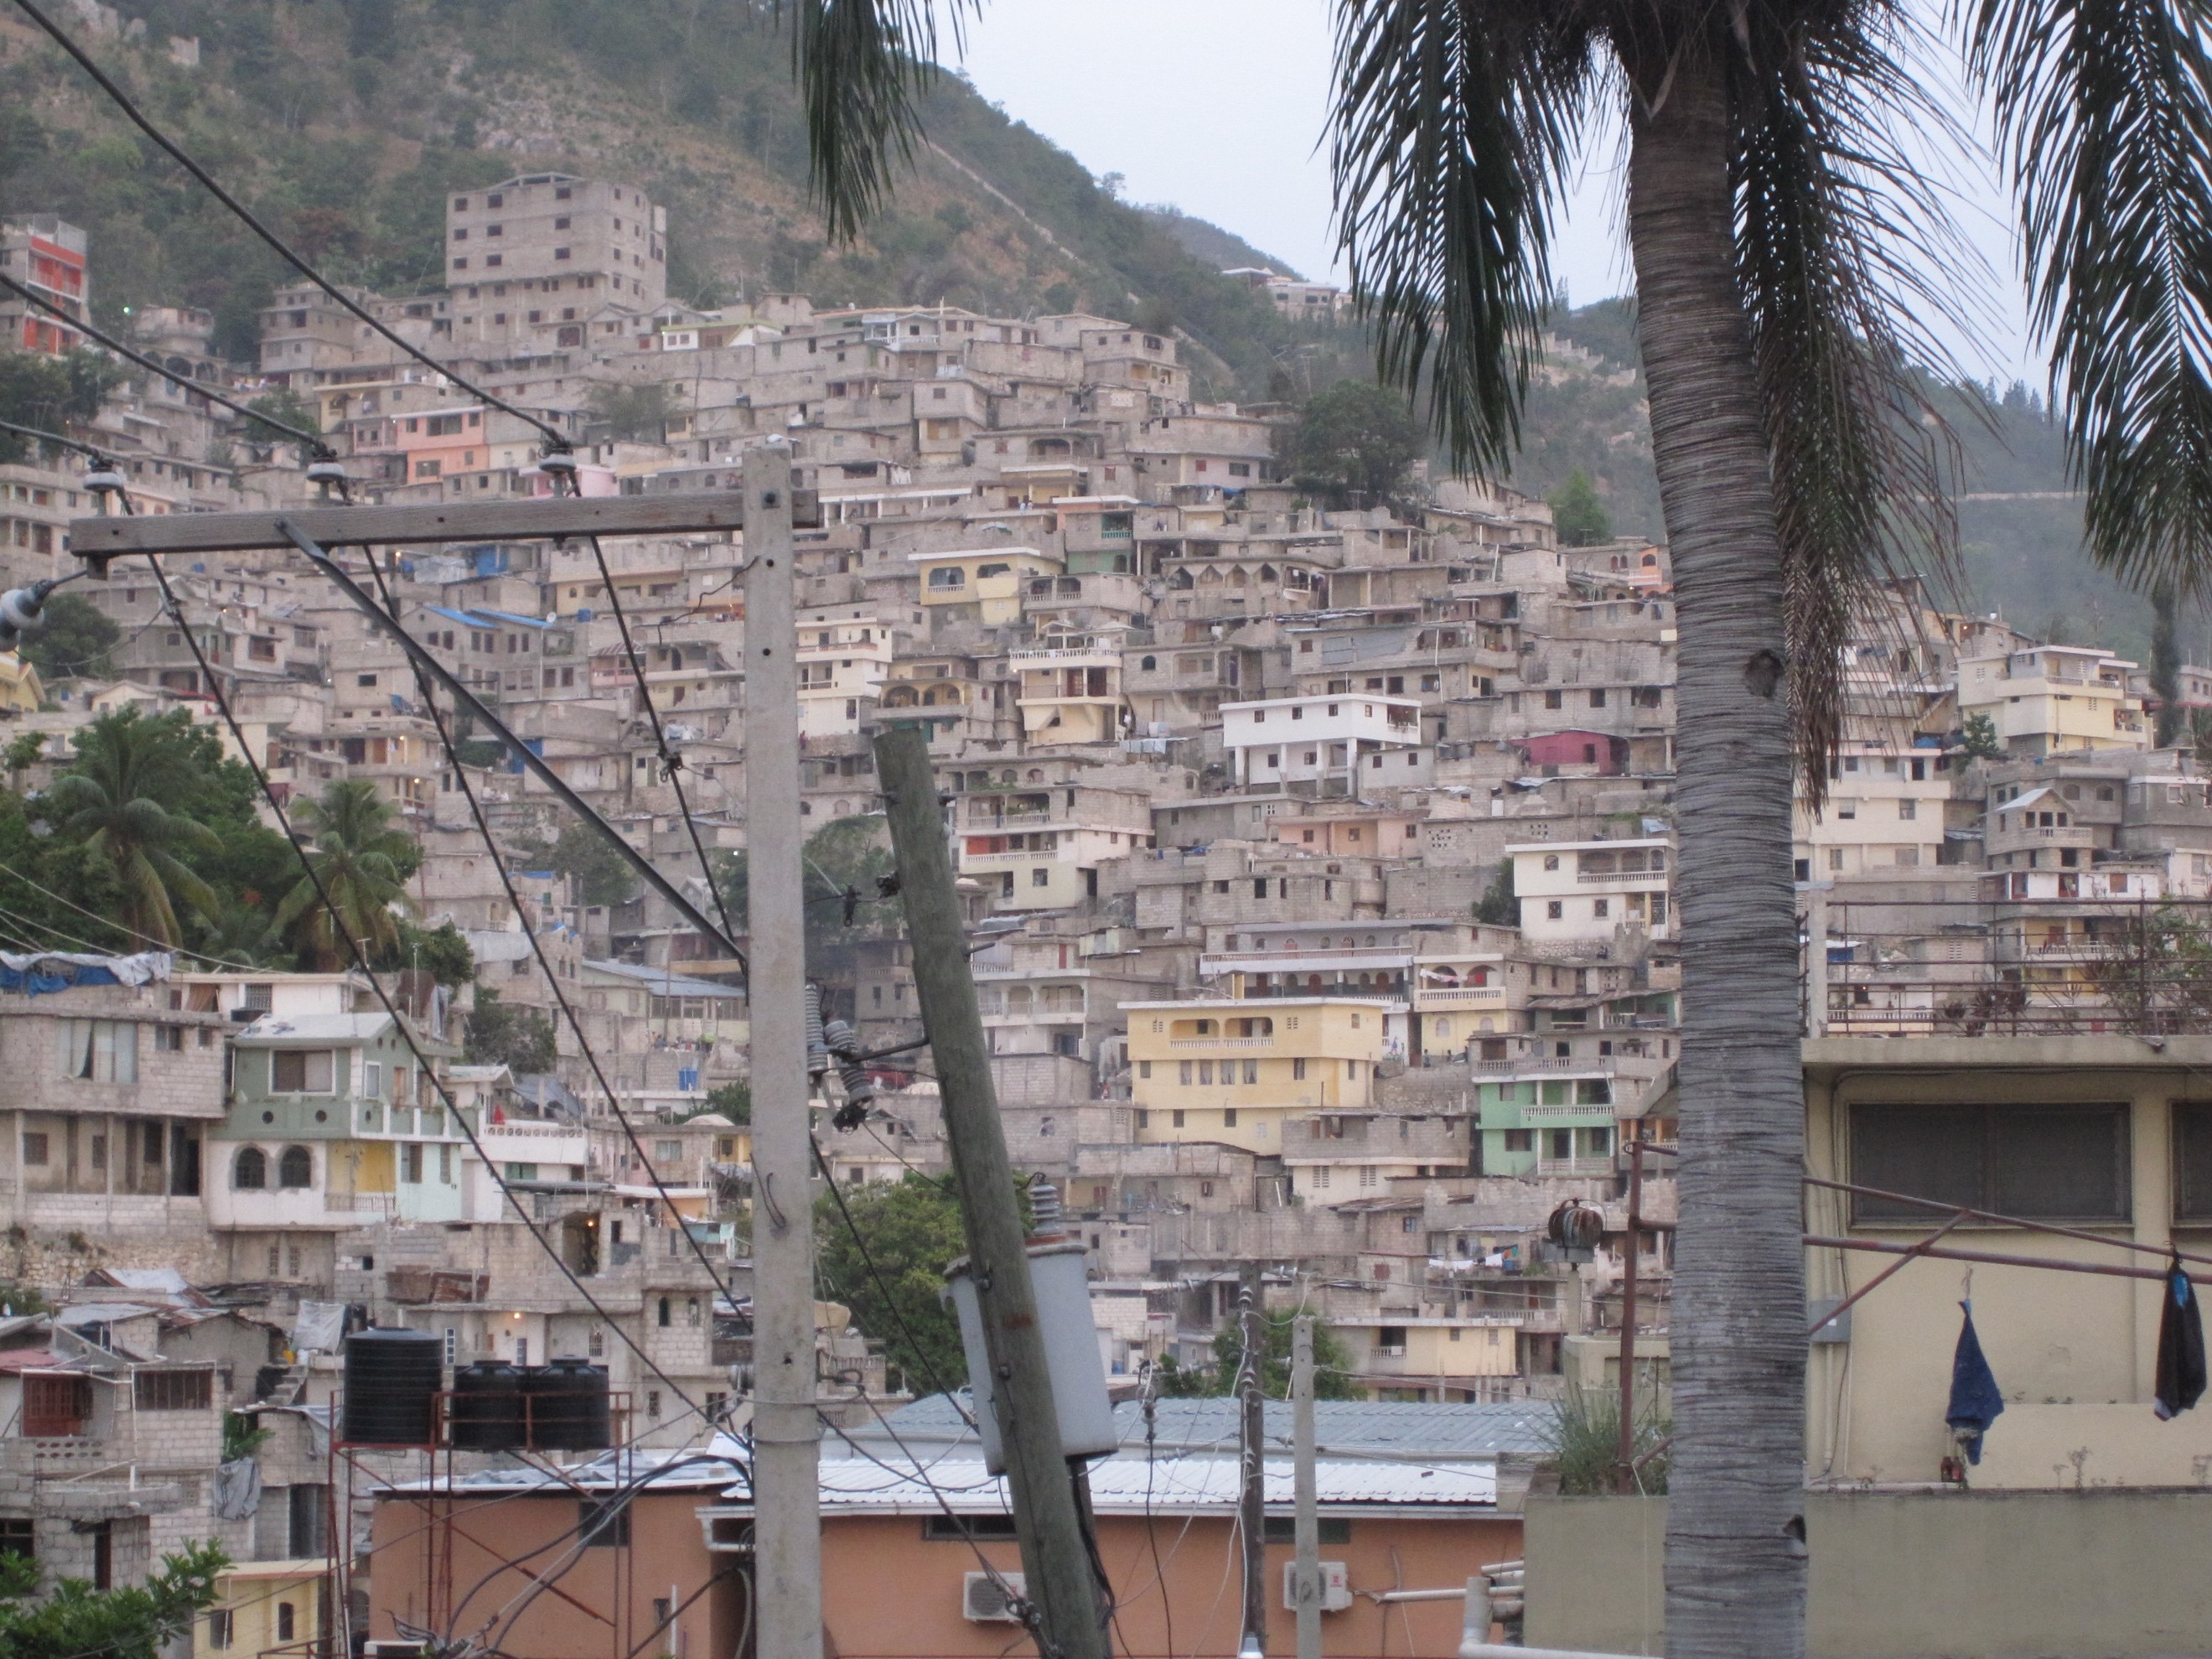 Hillside settlements in Port-au-Prince, Haiti